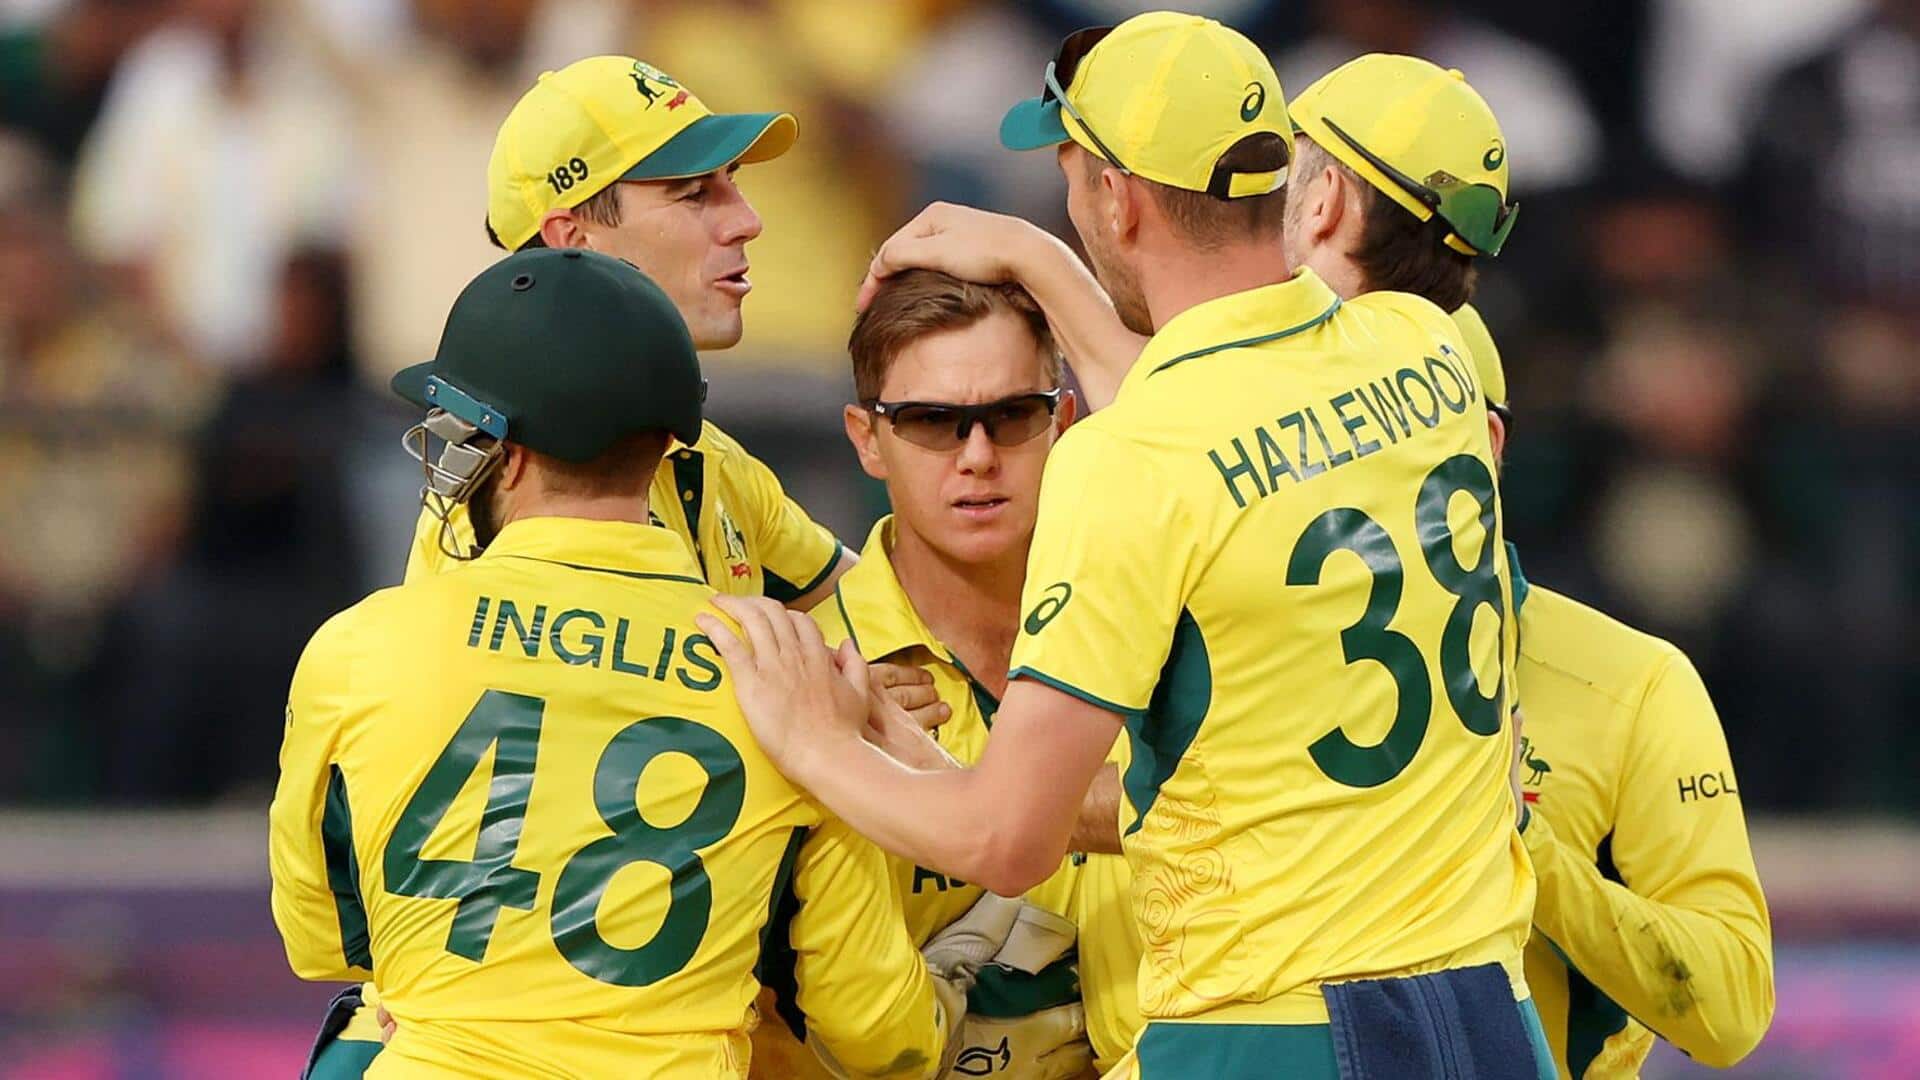 ICC Cricket World Cup, Australia overcome sorry England: Key stats